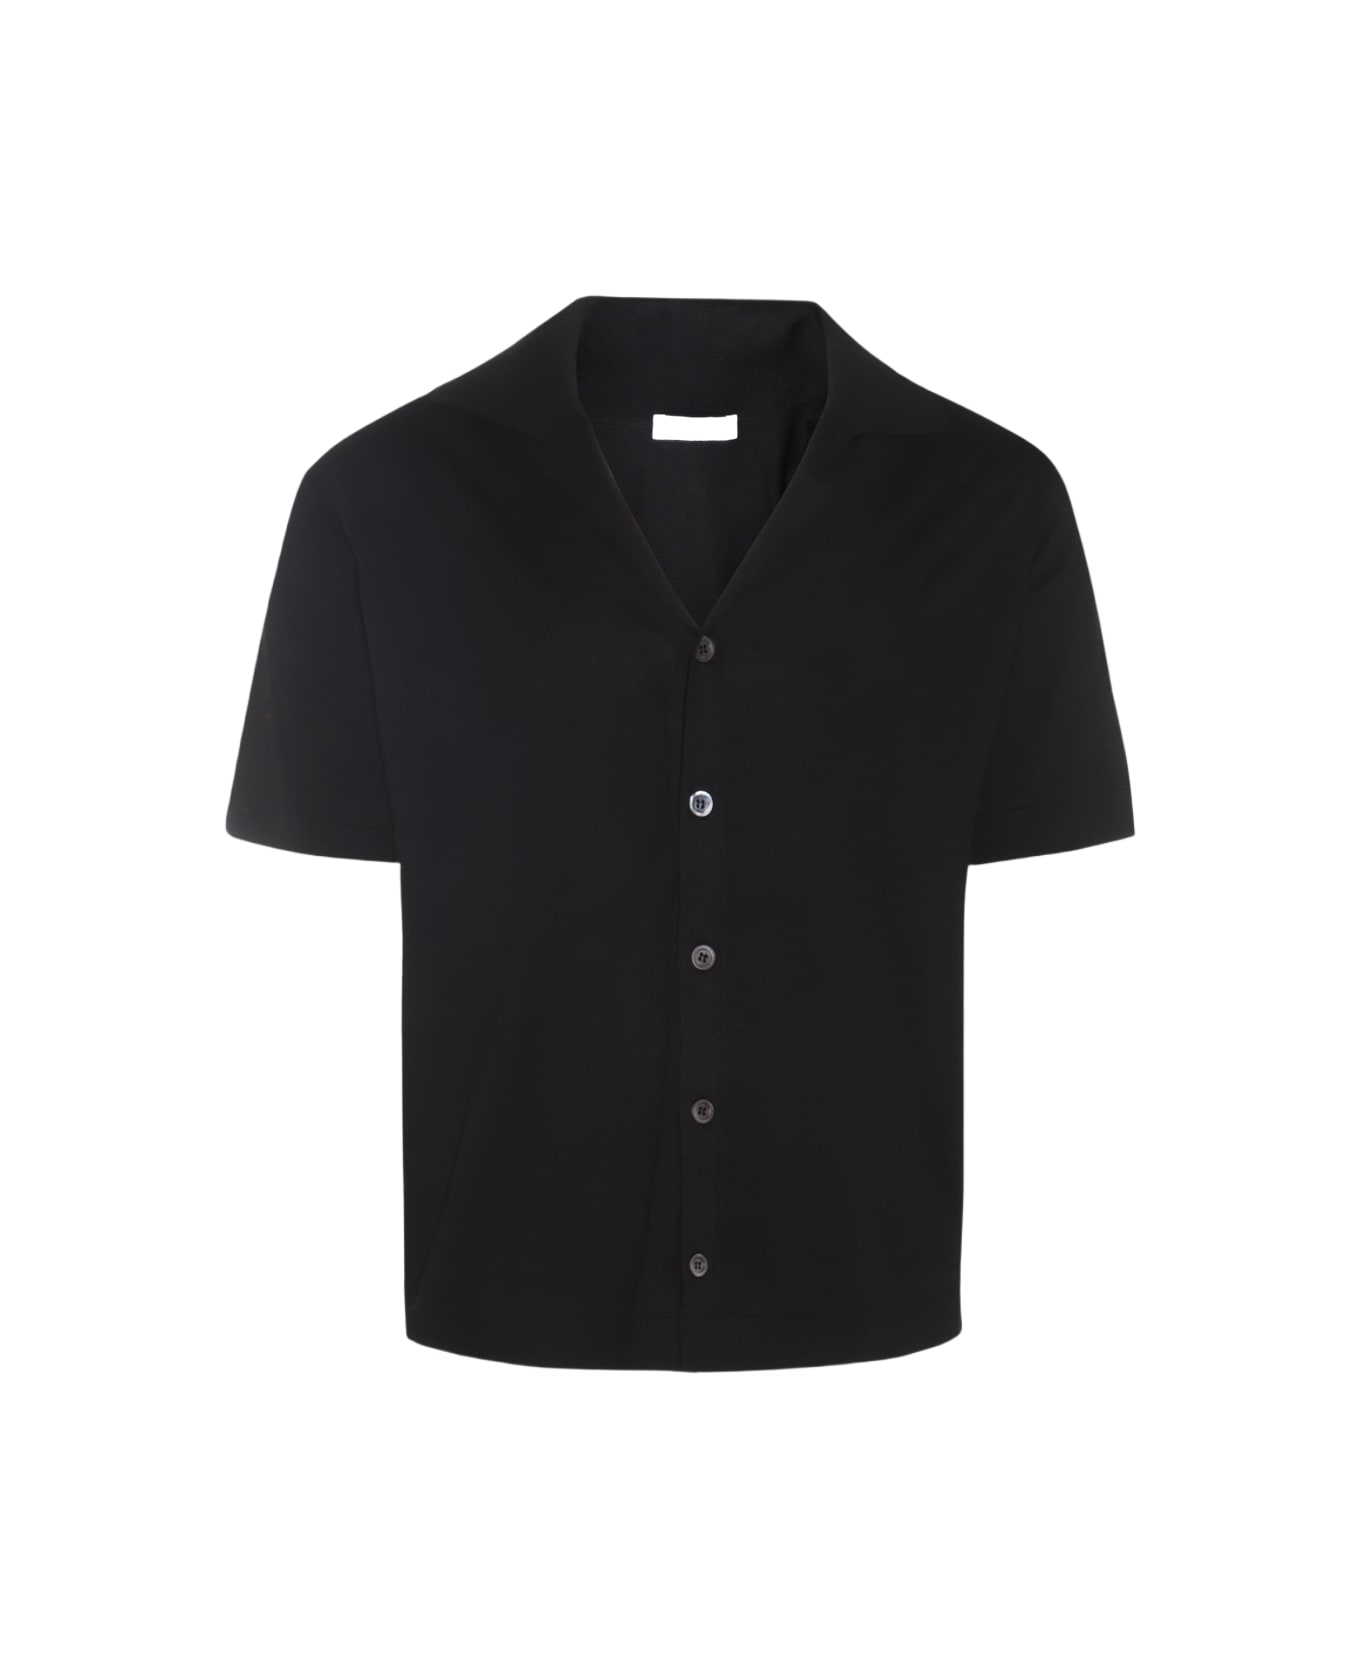 Cruciani Black Cotton Shirt - Black シャツ